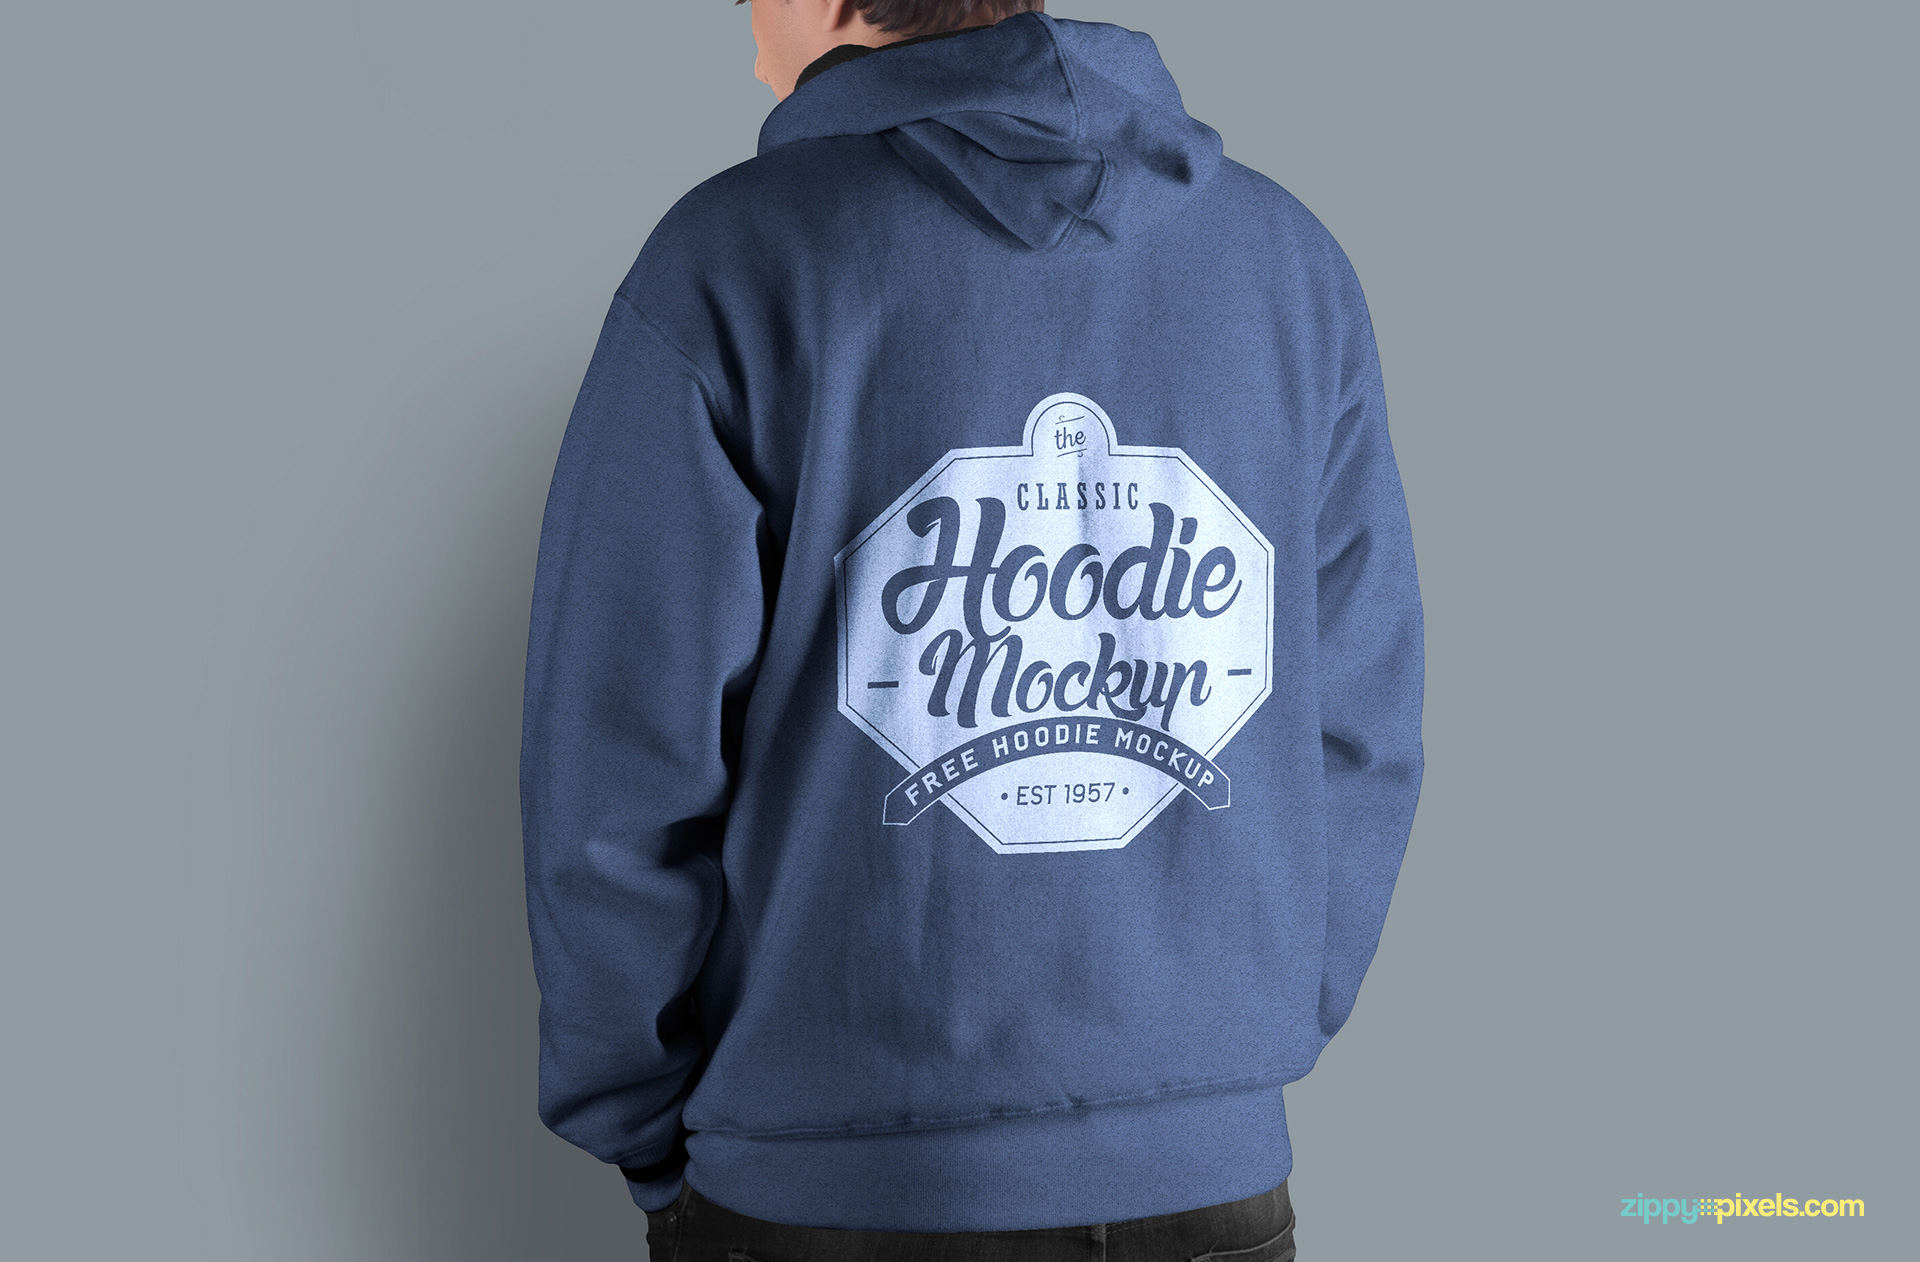 Download Free Hoodie Mockup PSD | ZippyPixels